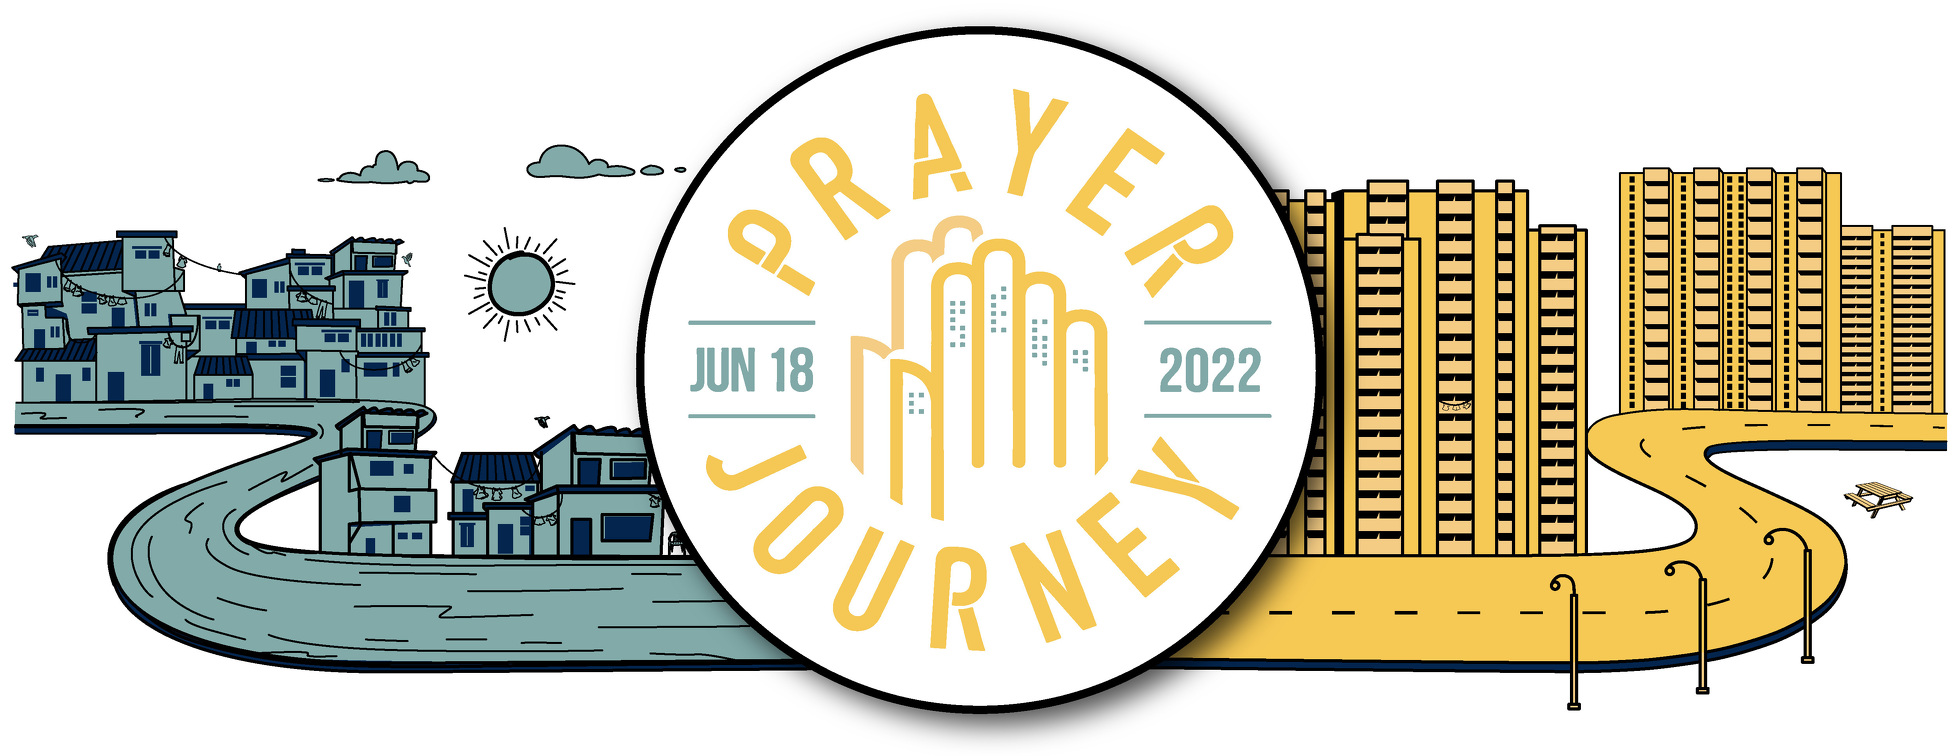 Prayer Journey 2022